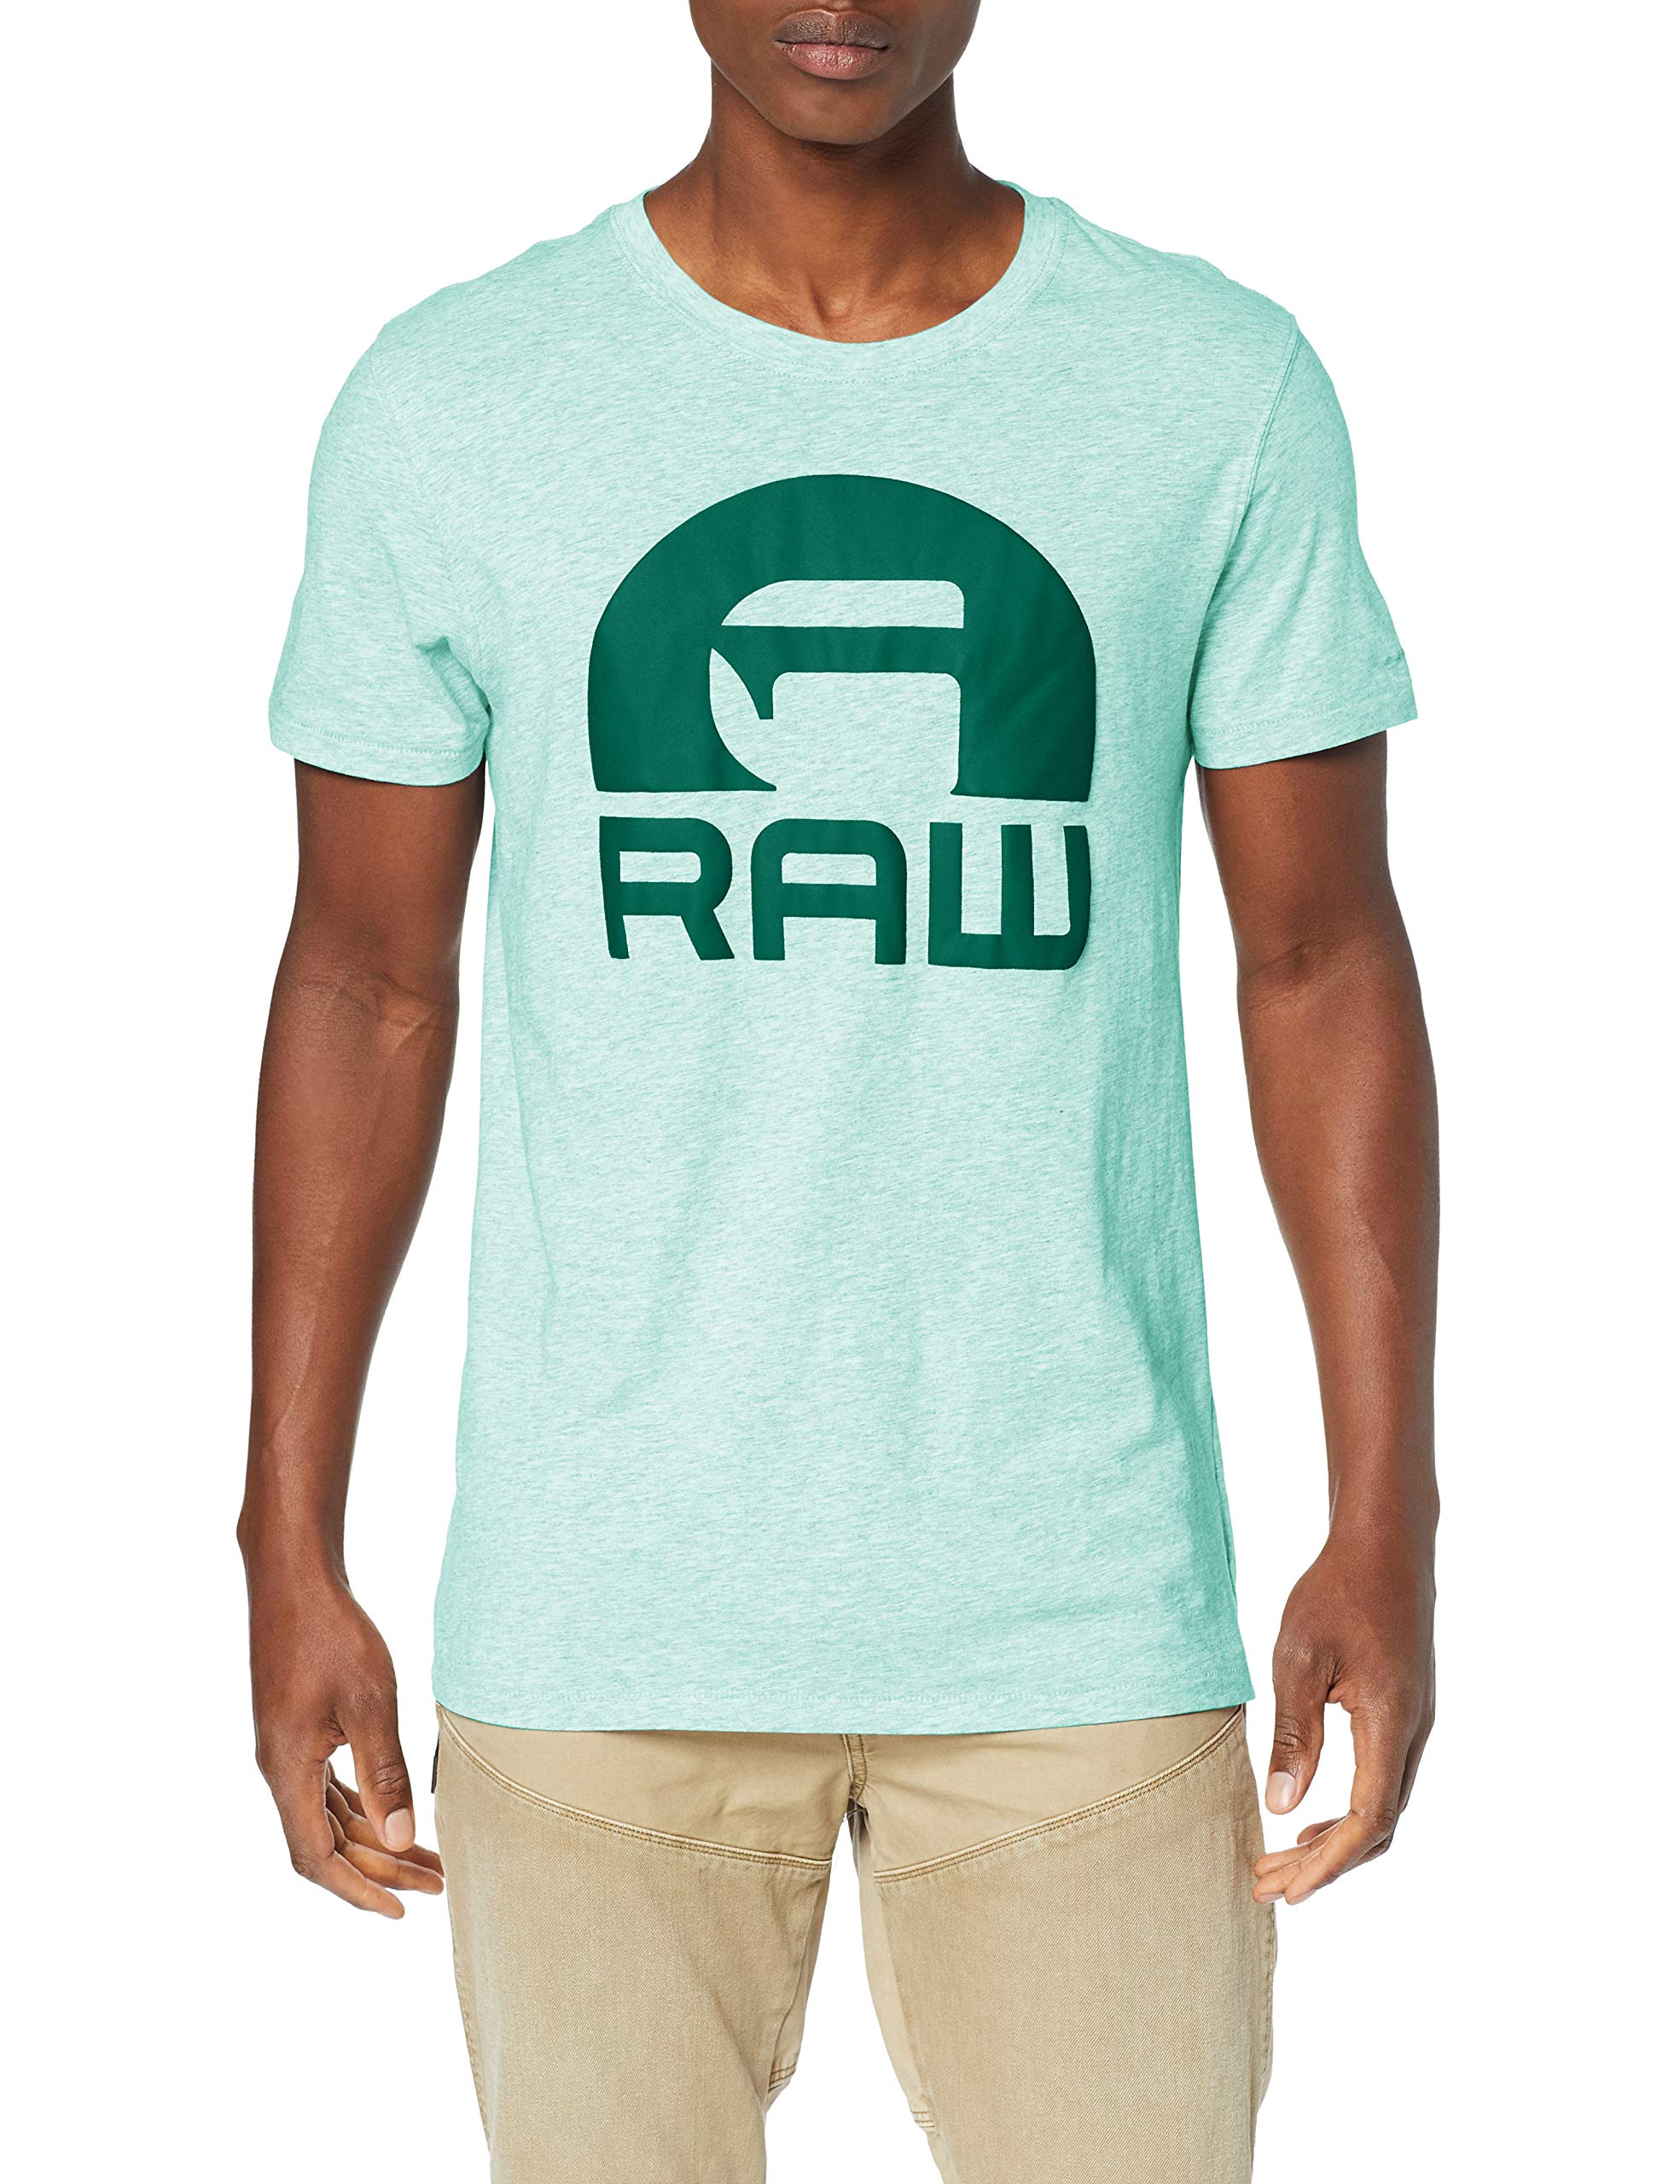 G-STAR RAW Graphic 2 Camiseta para Hombre desde 17,9€